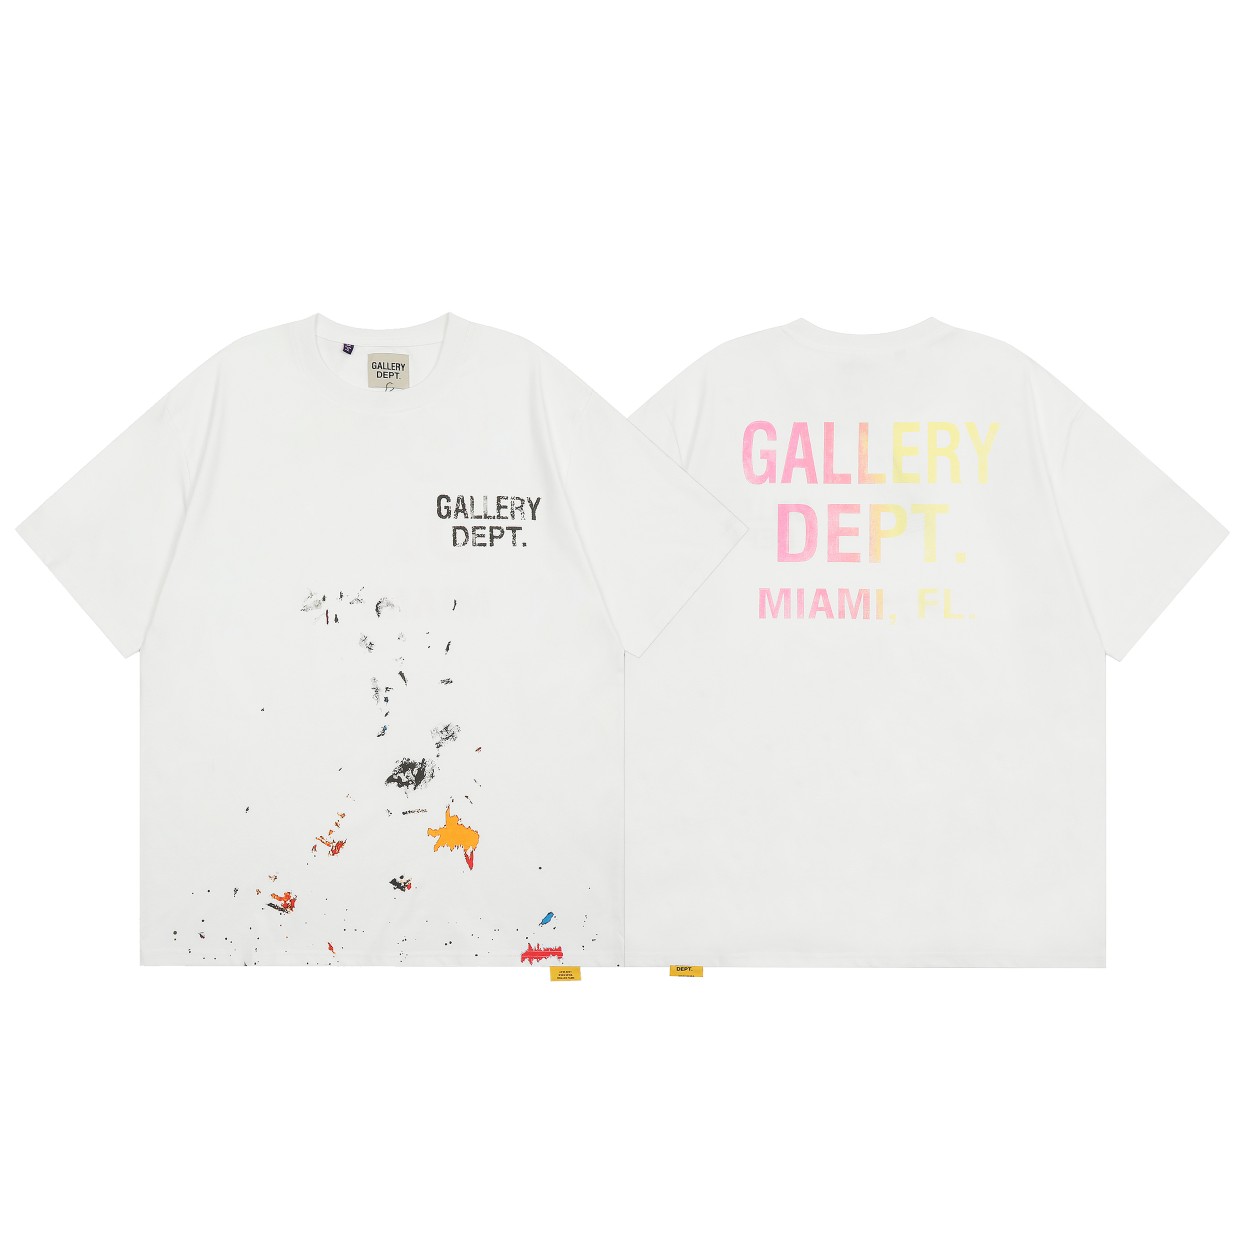 jdsd  款号2023#  BOARDWALK TEE Gallery Dept 高品质短袖T恤Color(颜色)：WHITE(白色)Size(尺码)：S, M, L, XL